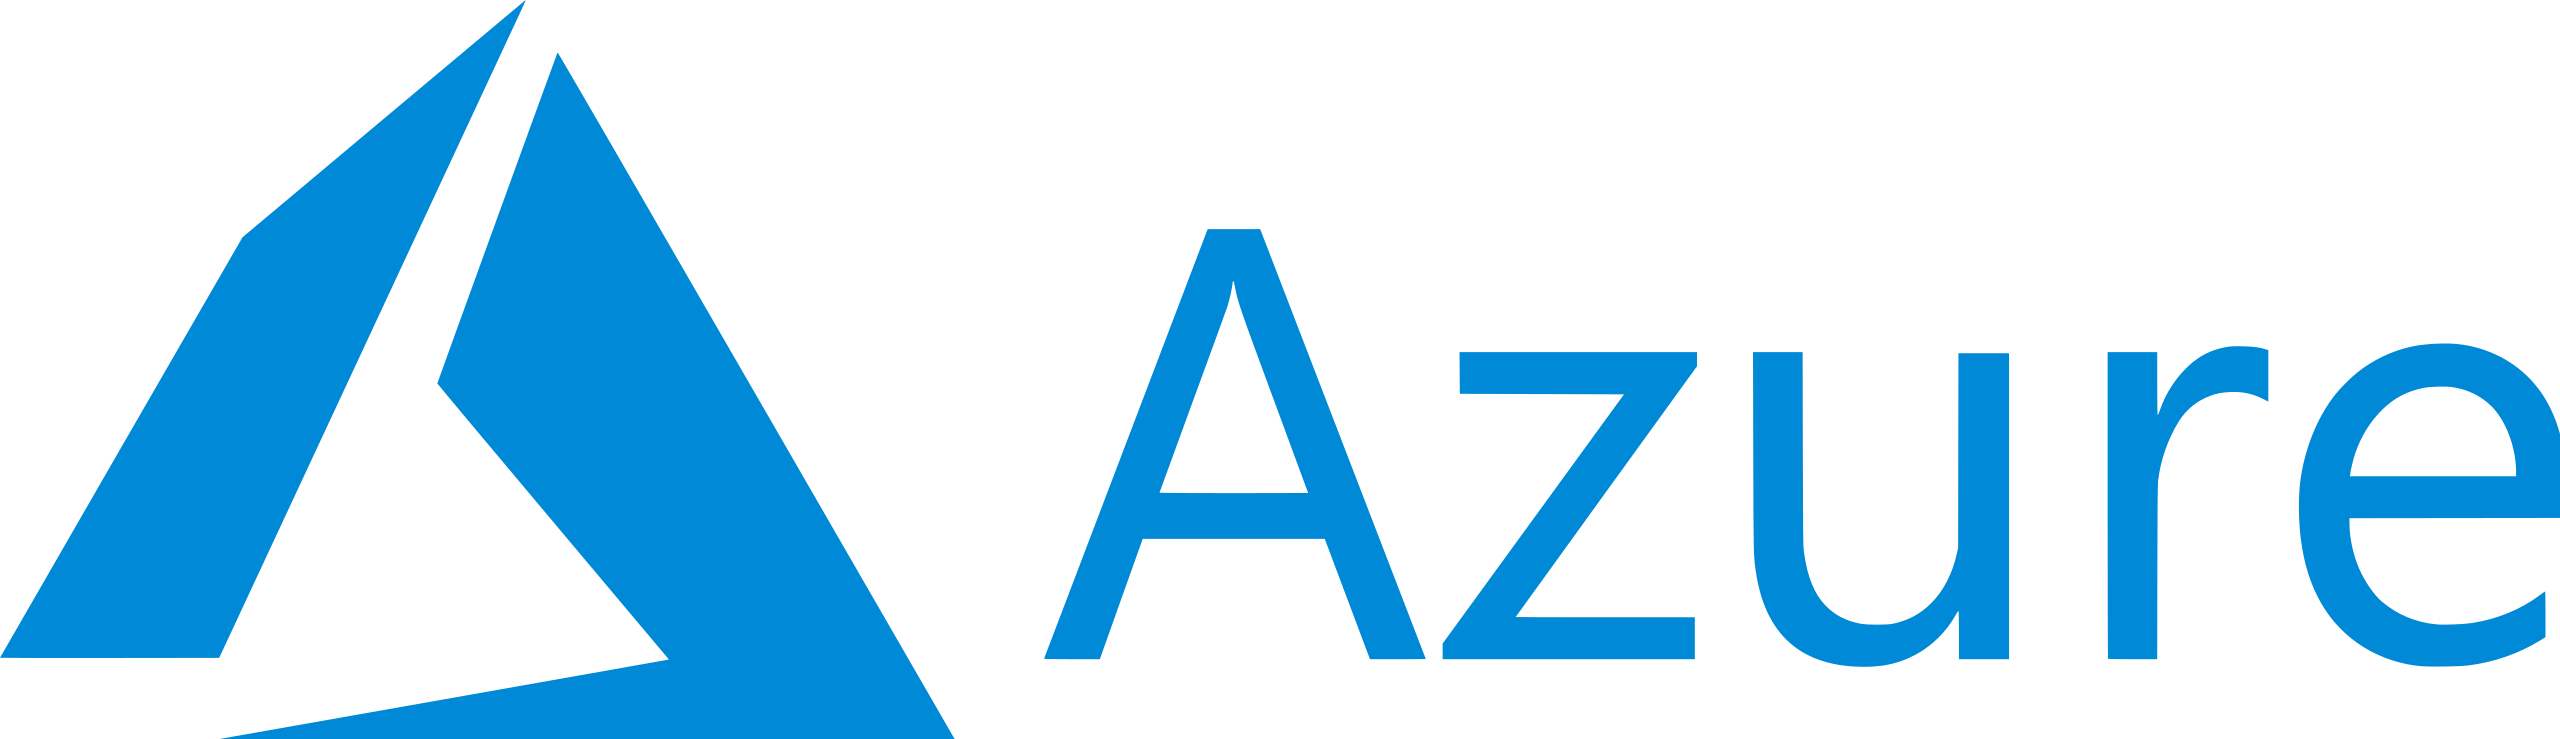 Dah Reply partner Microsoft Azure